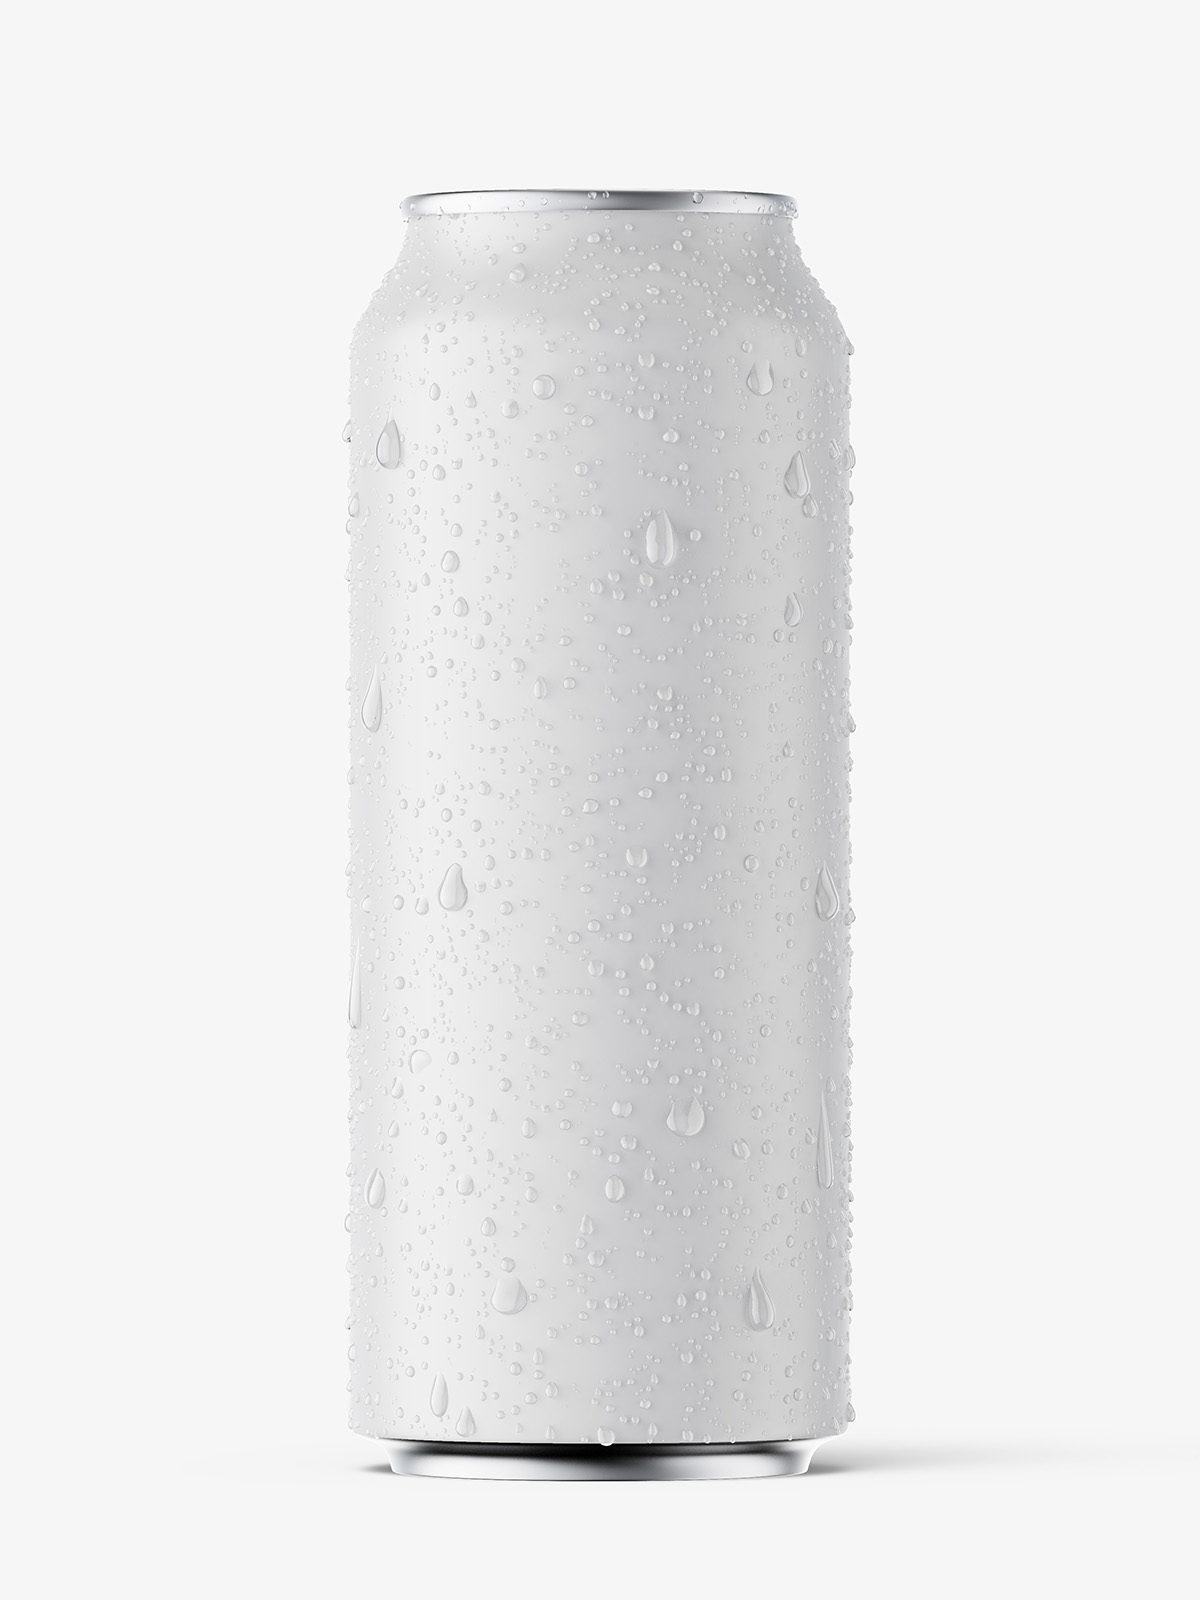 Download Matt Beer Can With Condensation Mockup 500 Ml Smarty Mockups